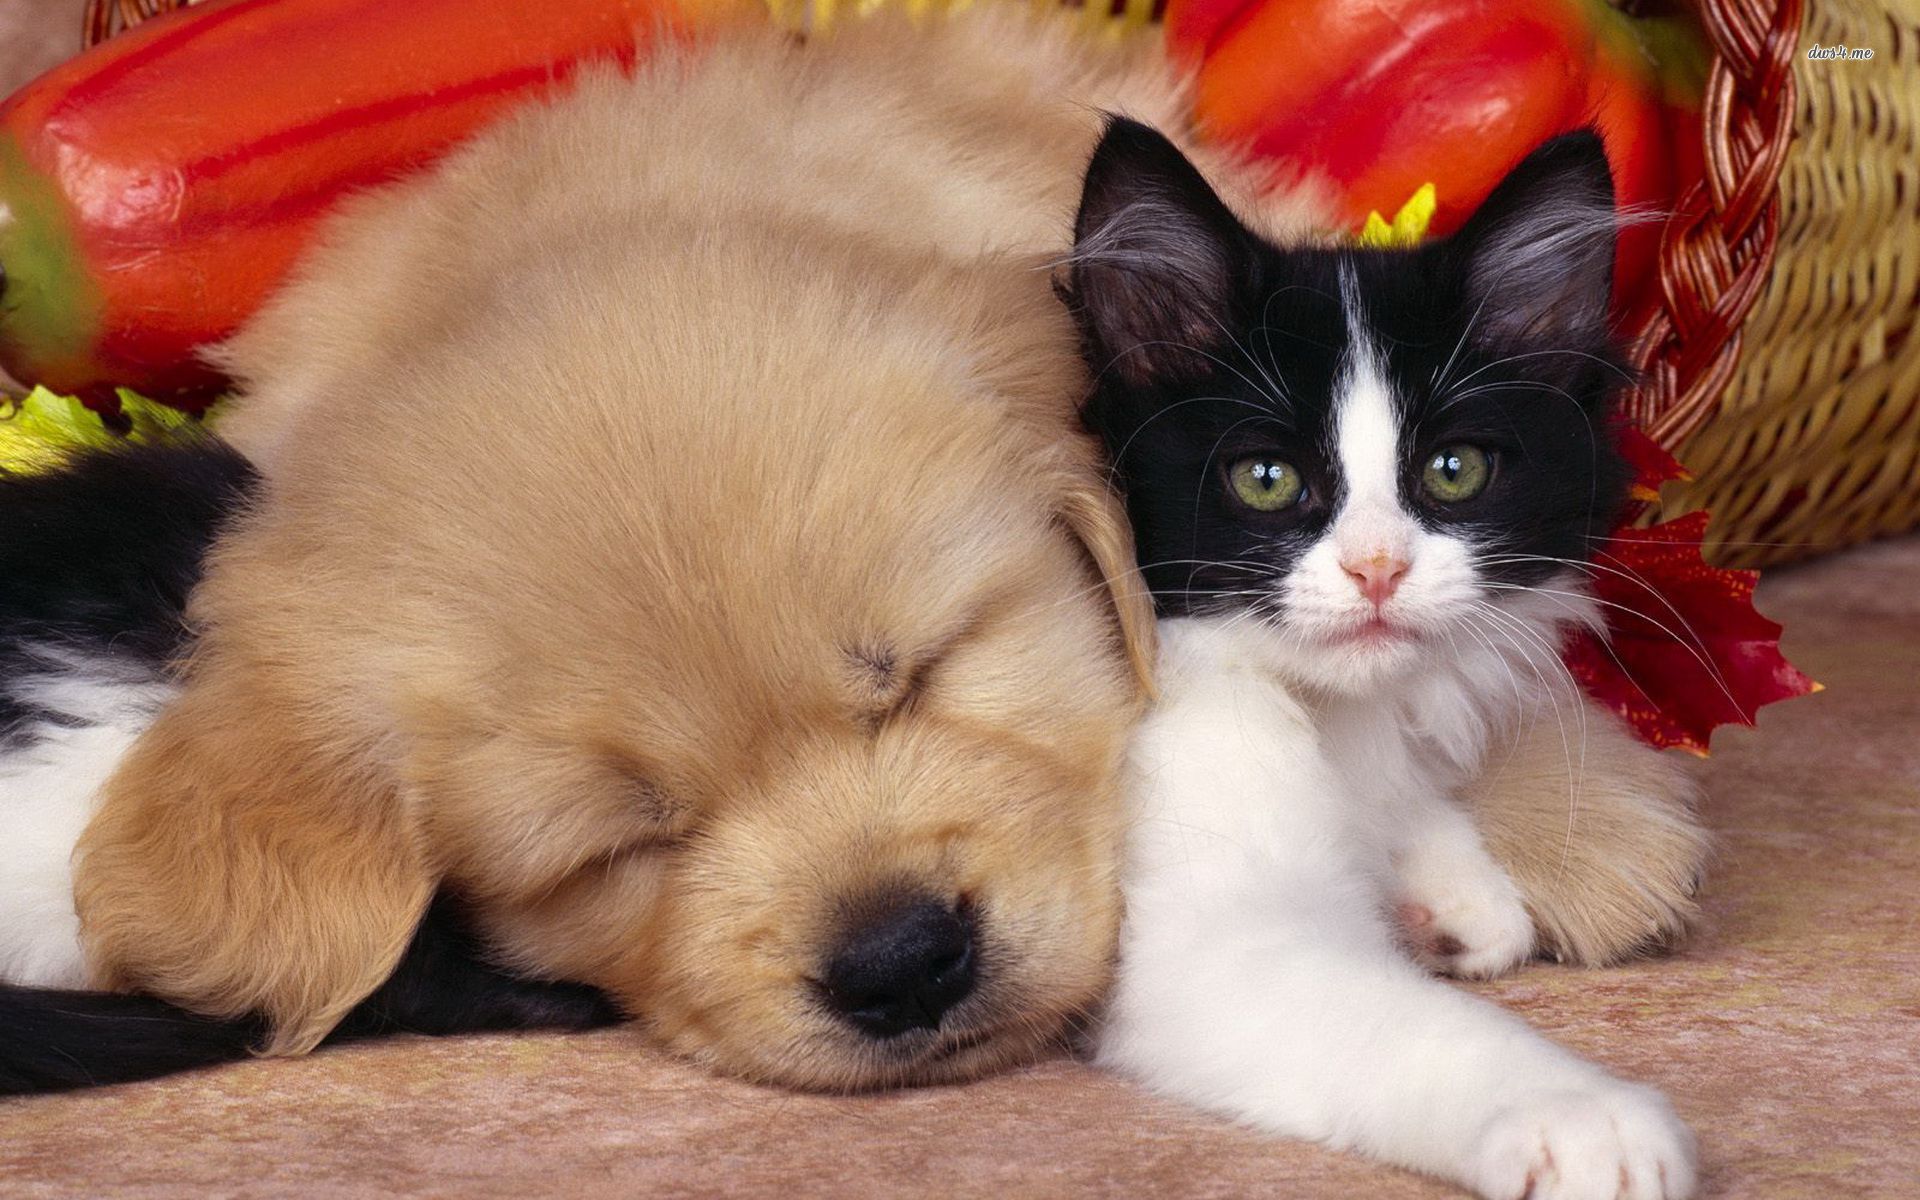 Cute Dog And Cat Wallpapers Cute Dog Cat hd Wallpaper